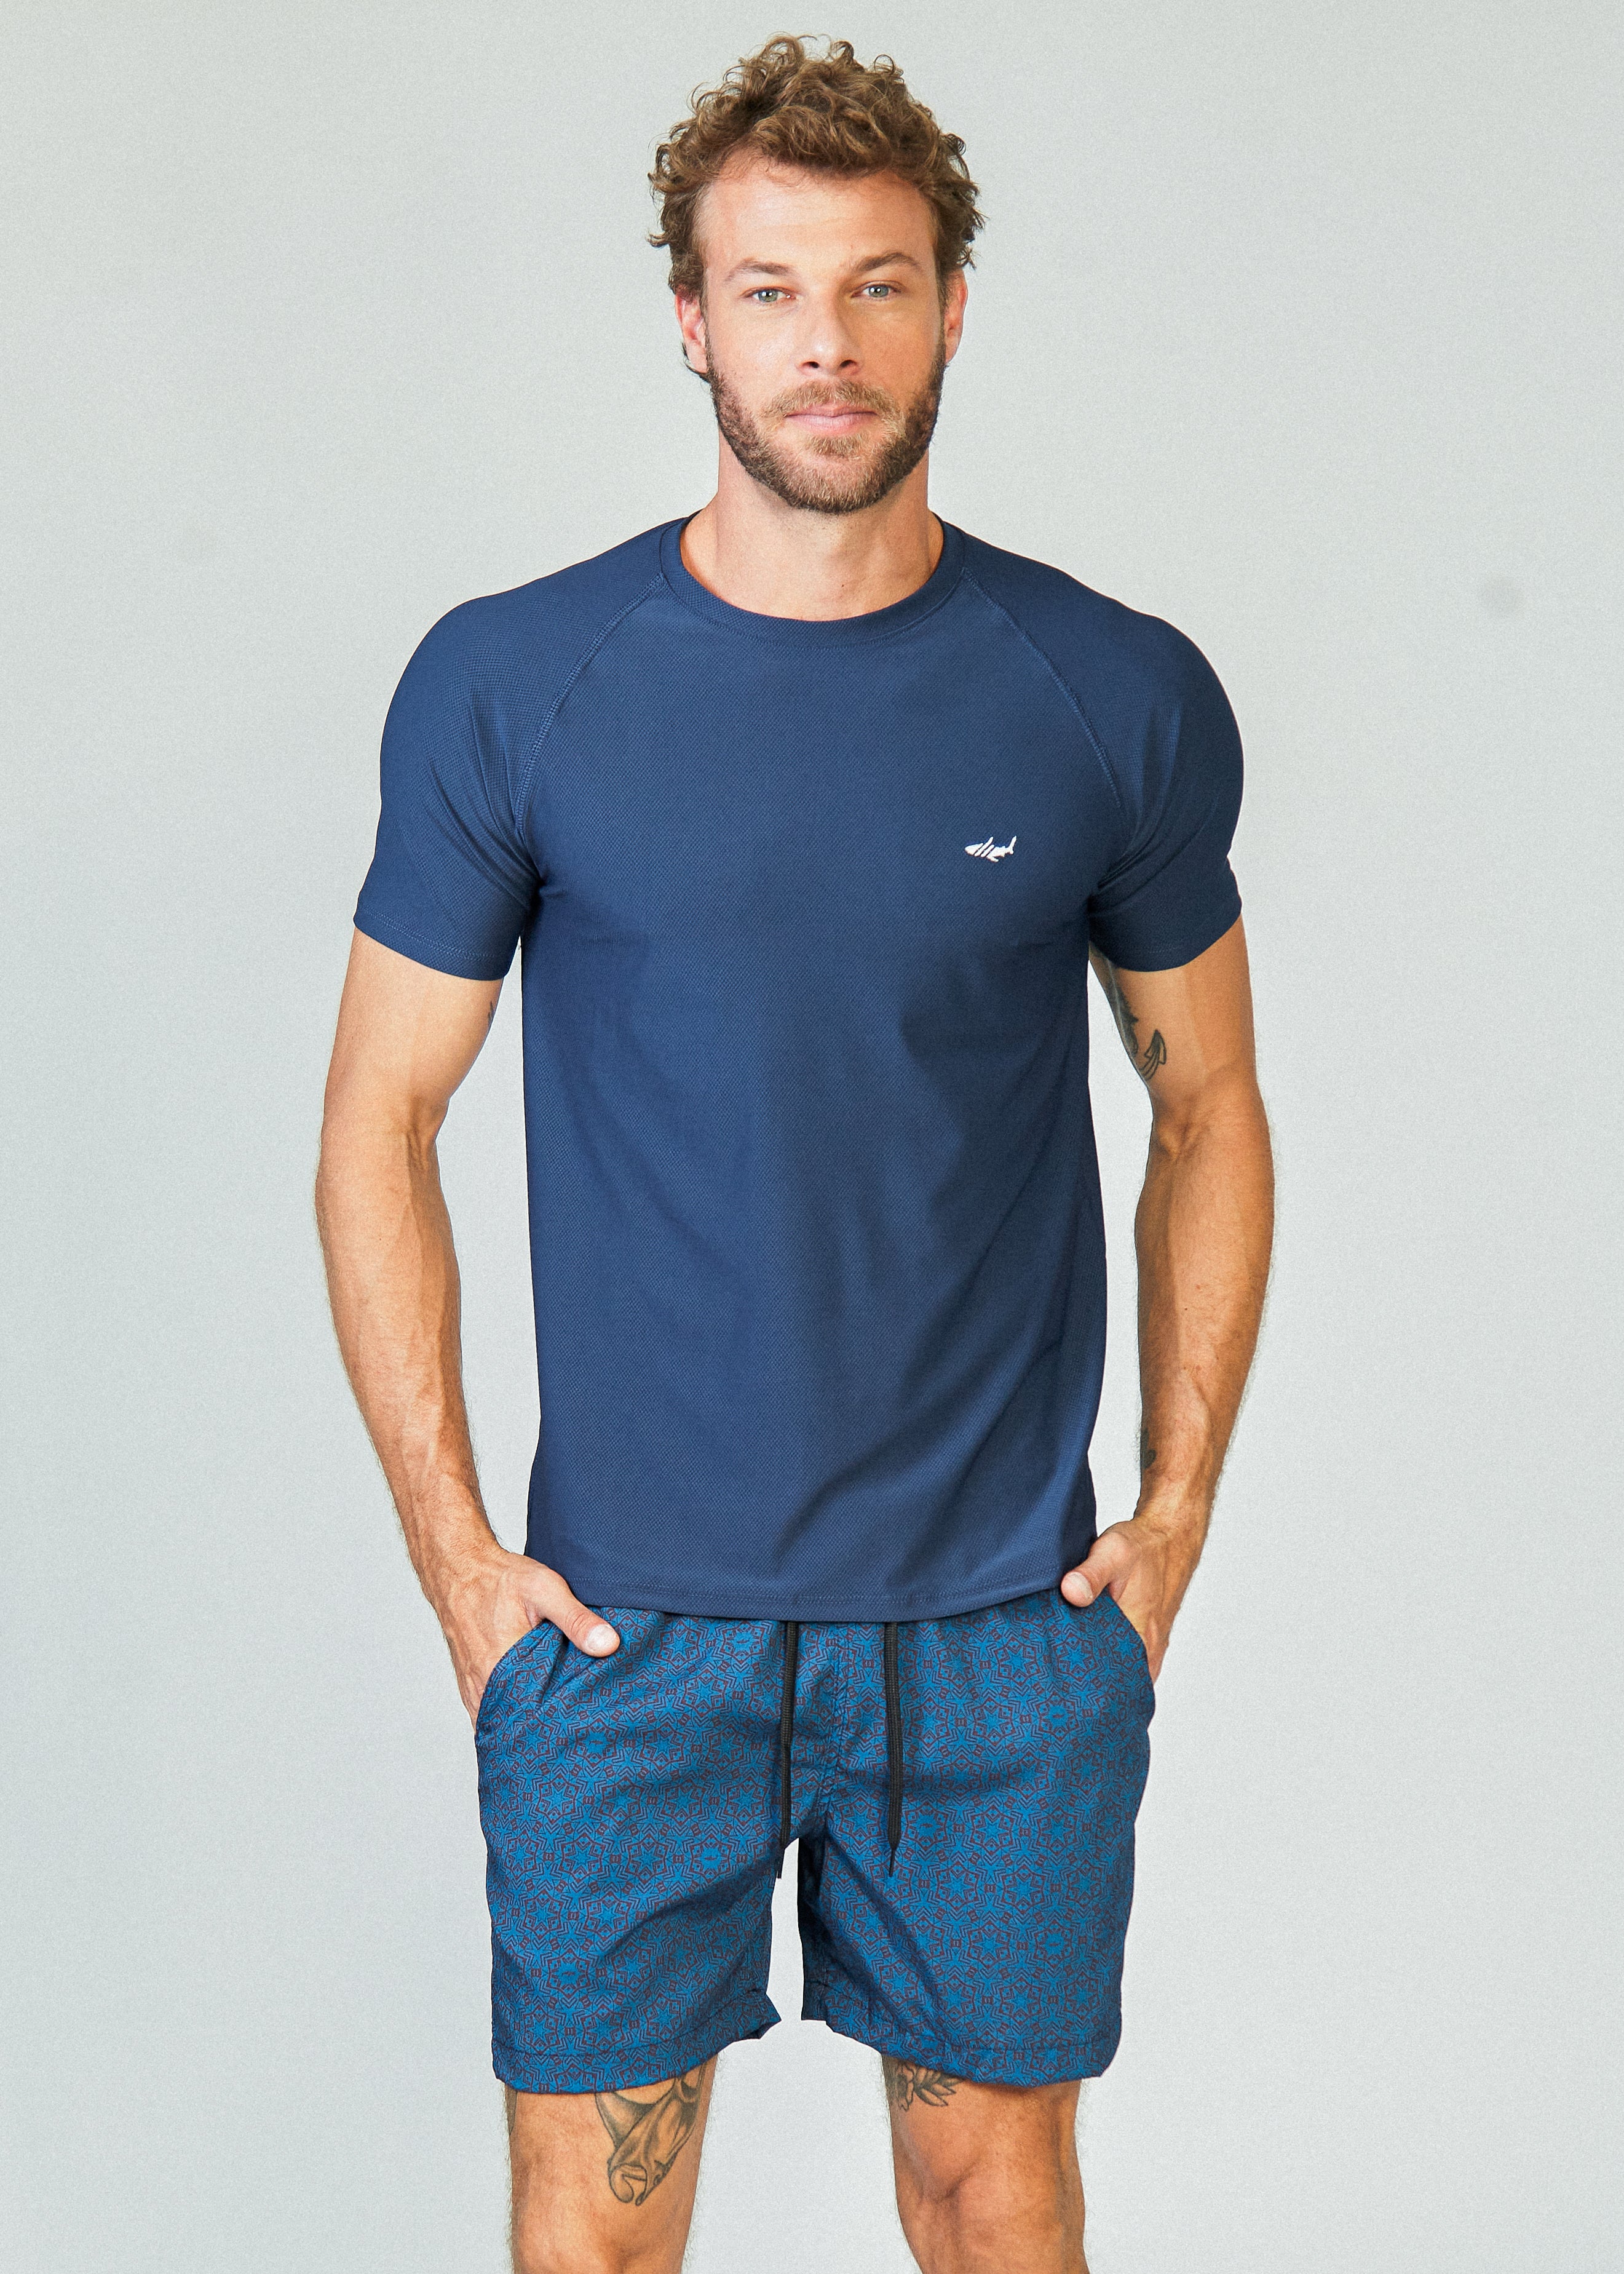 Camiseta Slim Dry Fit - Azul Marinho